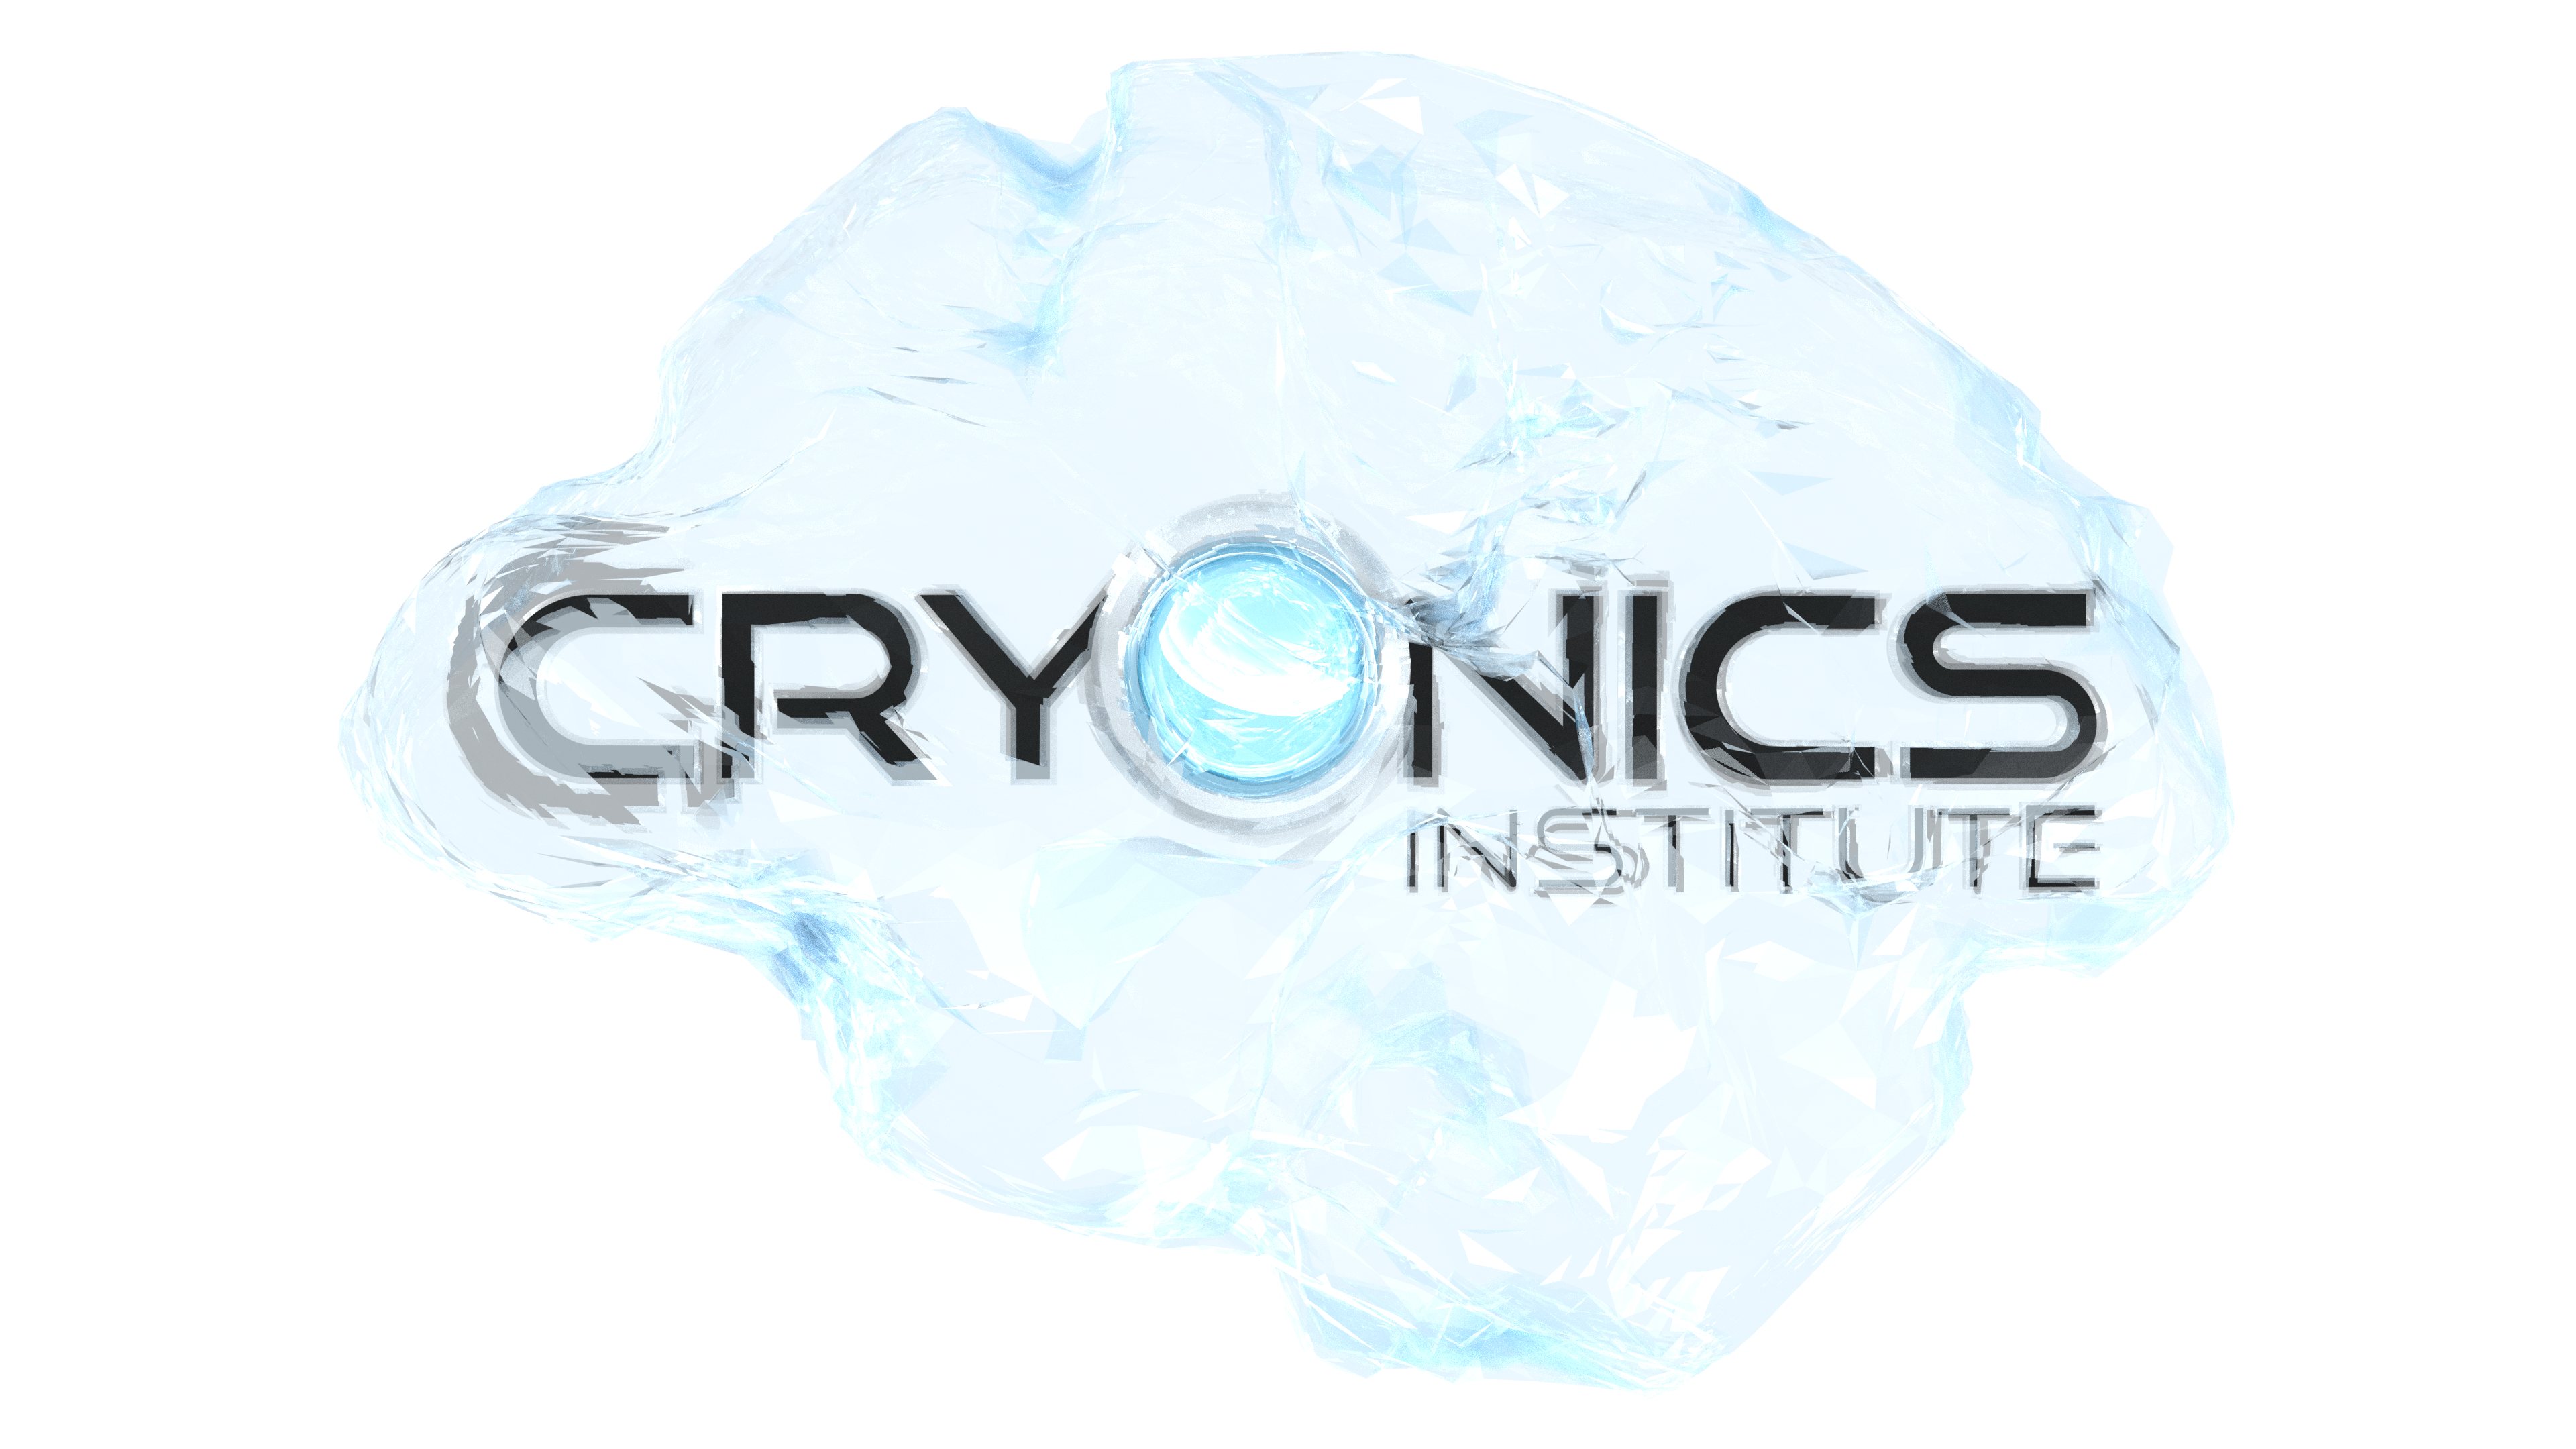 Cryonics Institute Cryonics Digital Art 3840x2160